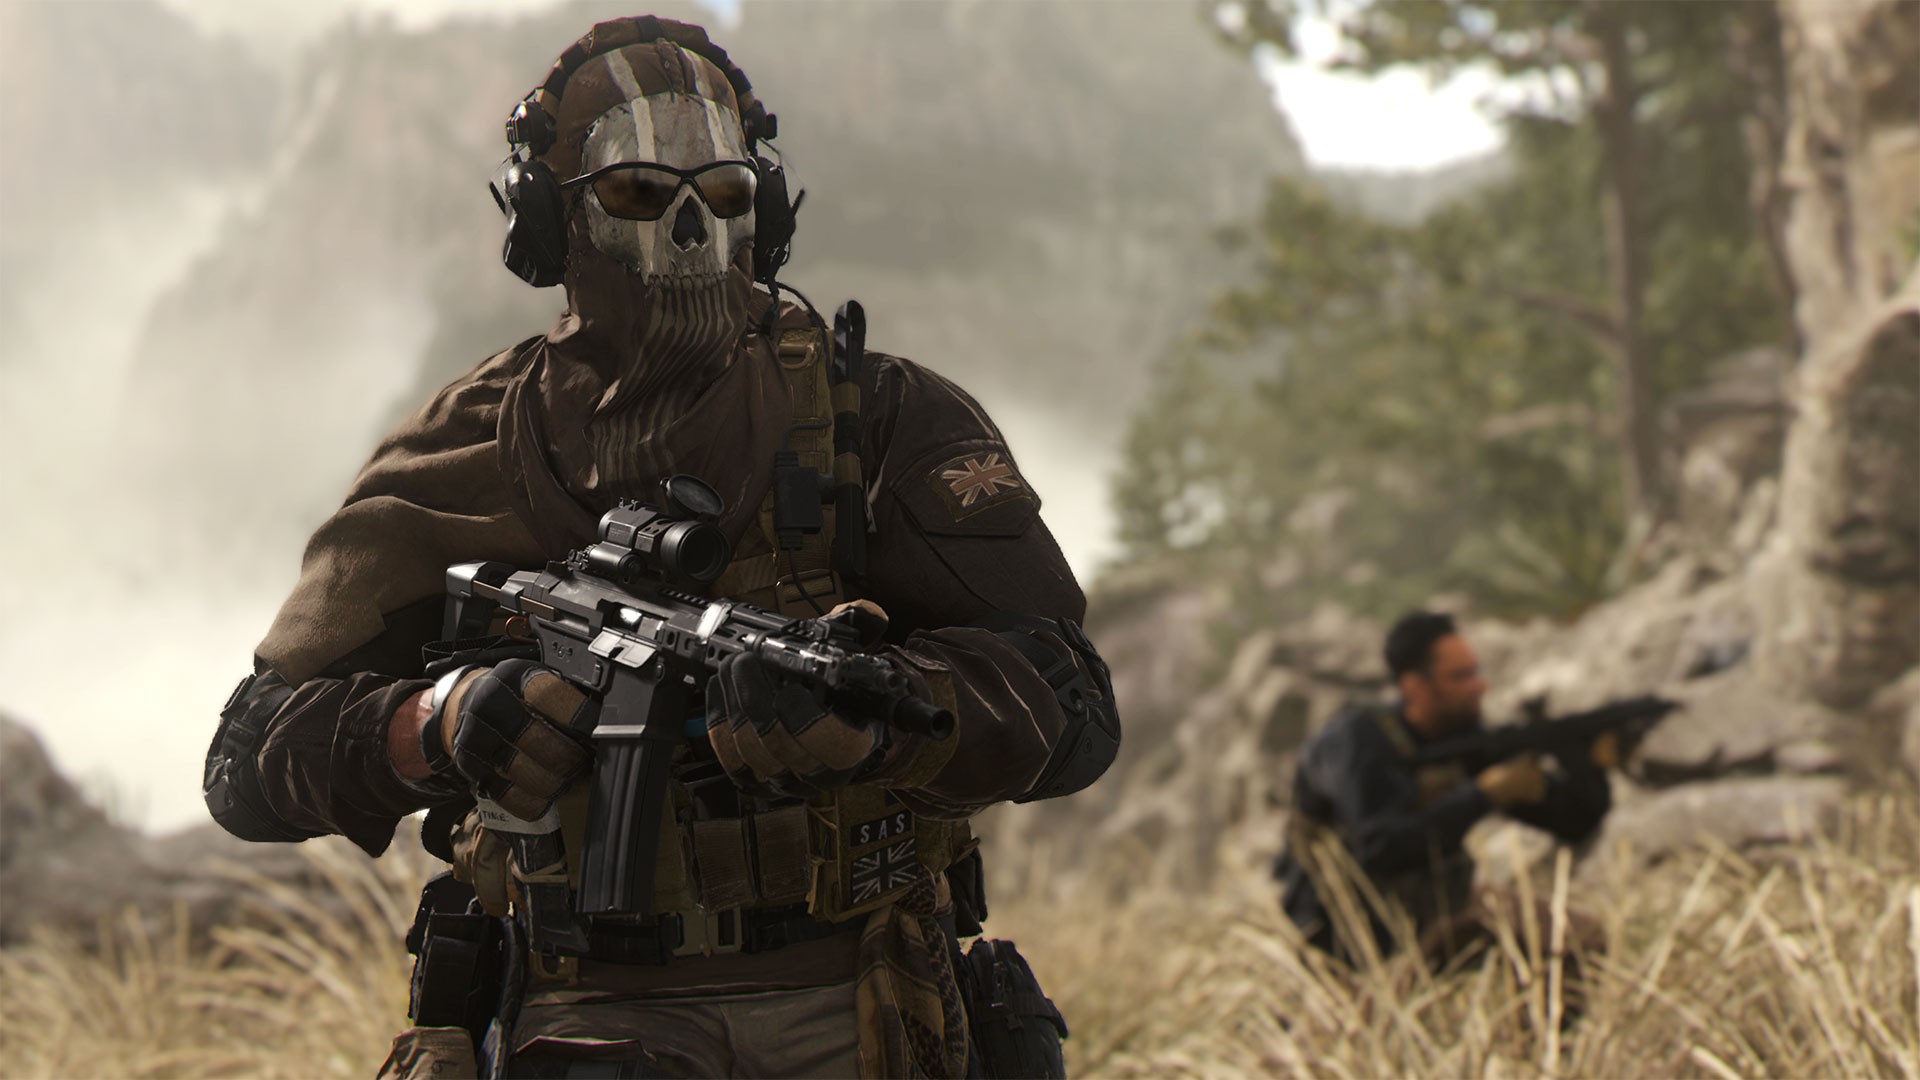 Call Of Duty Modern Warfare 3 - PS5 (Mídia Física) - Nova Era